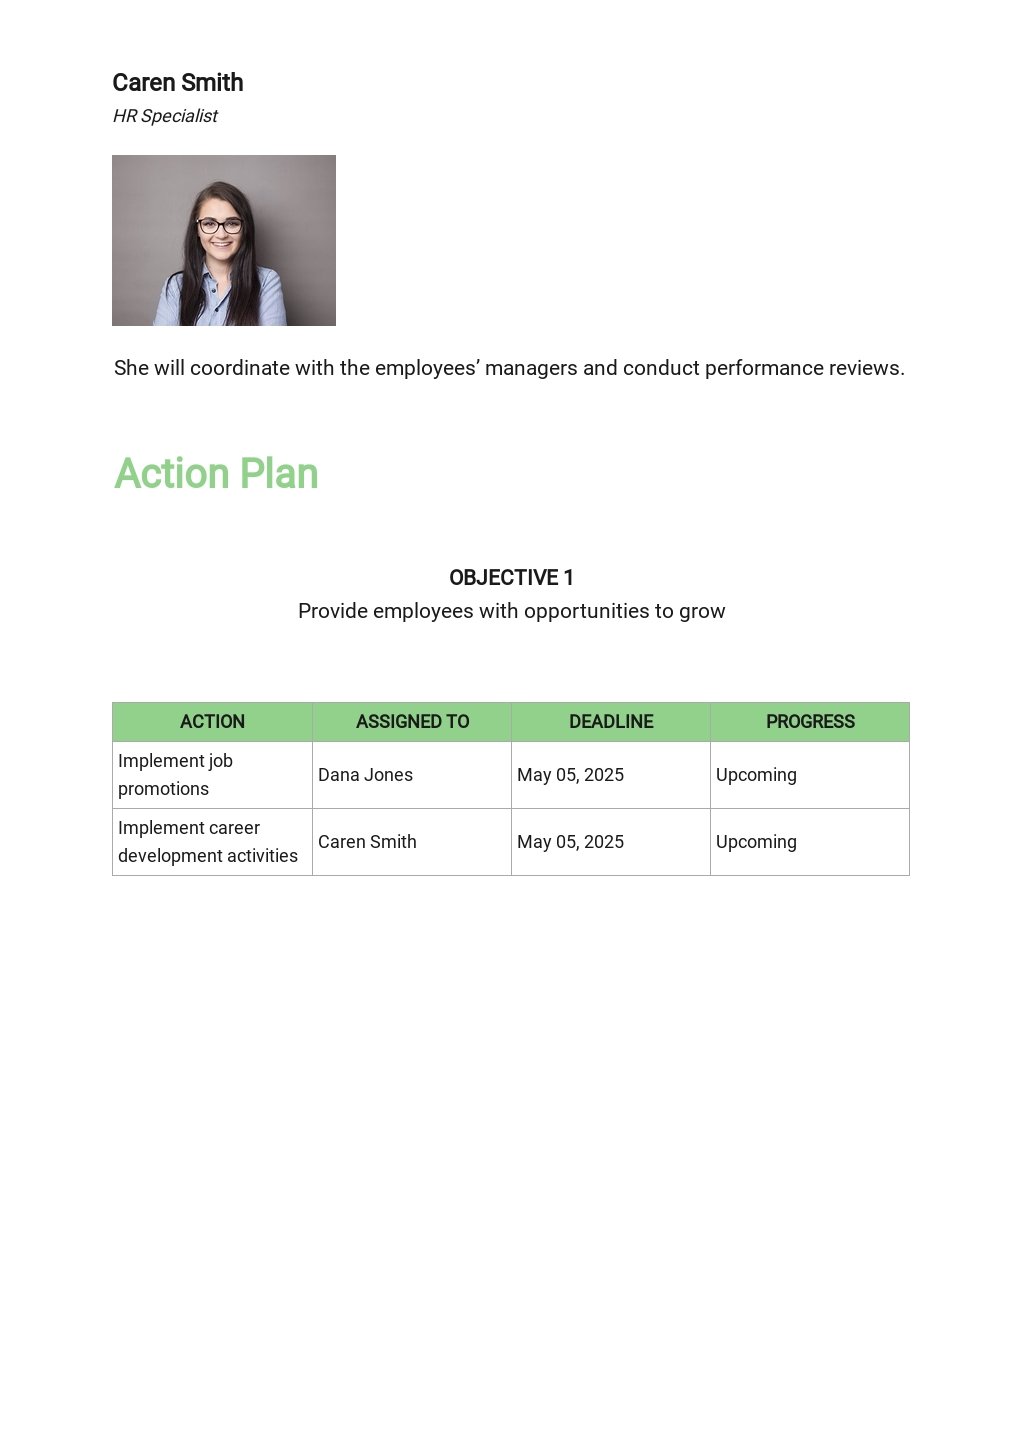 Employee Retention Plan Template [Free PDF] Word (DOC) Apple (MAC